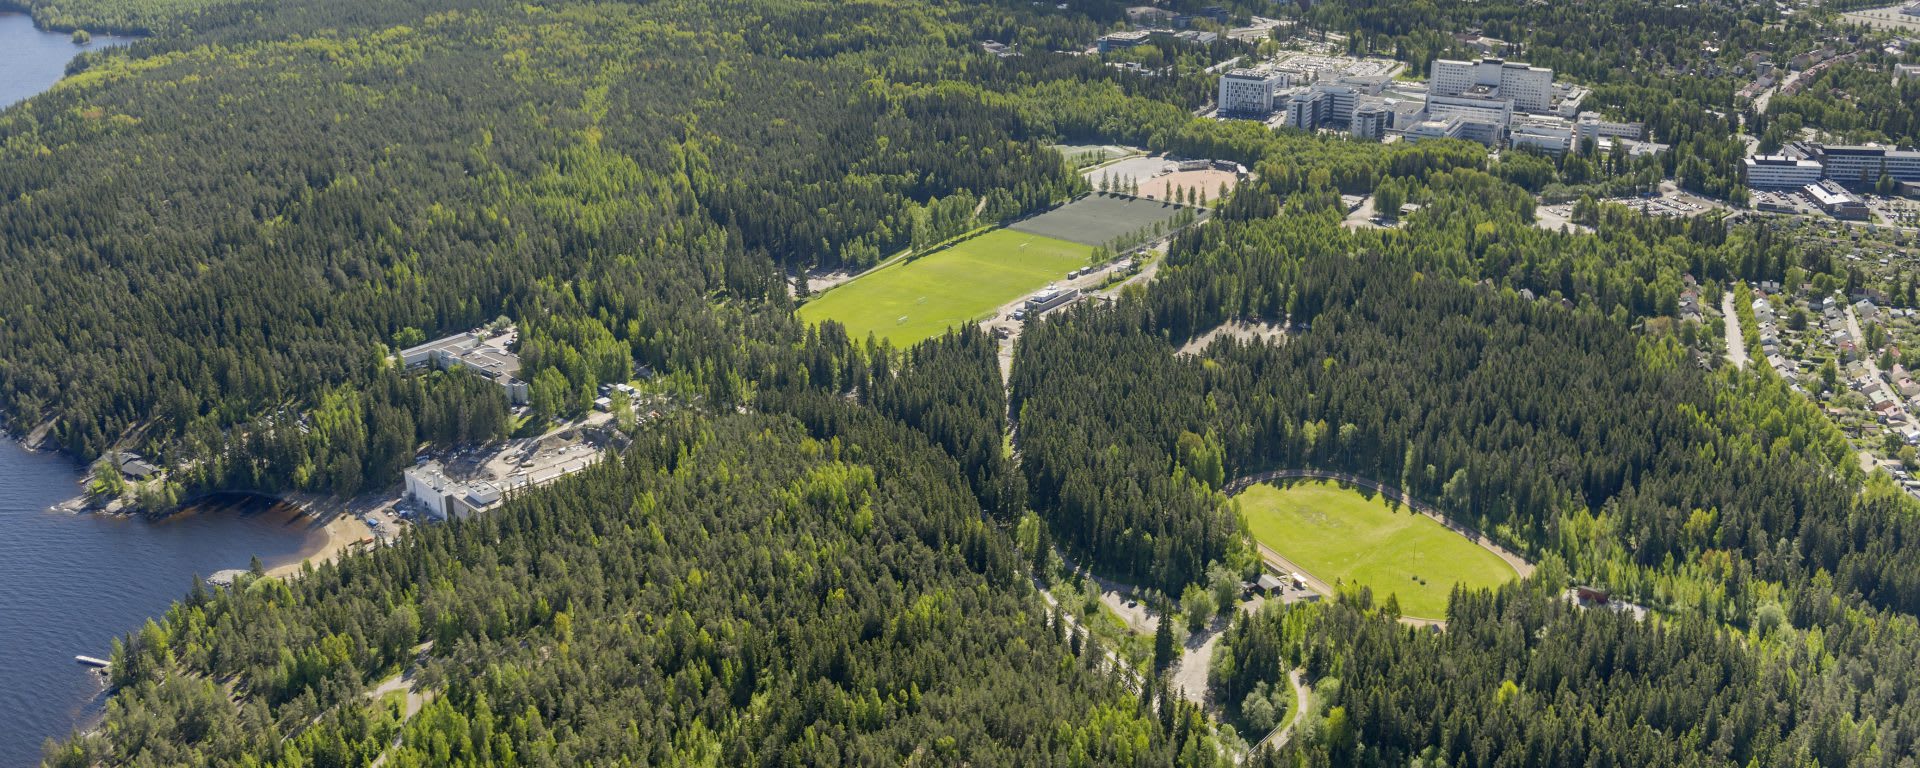 Kauppi Sports park area from above.